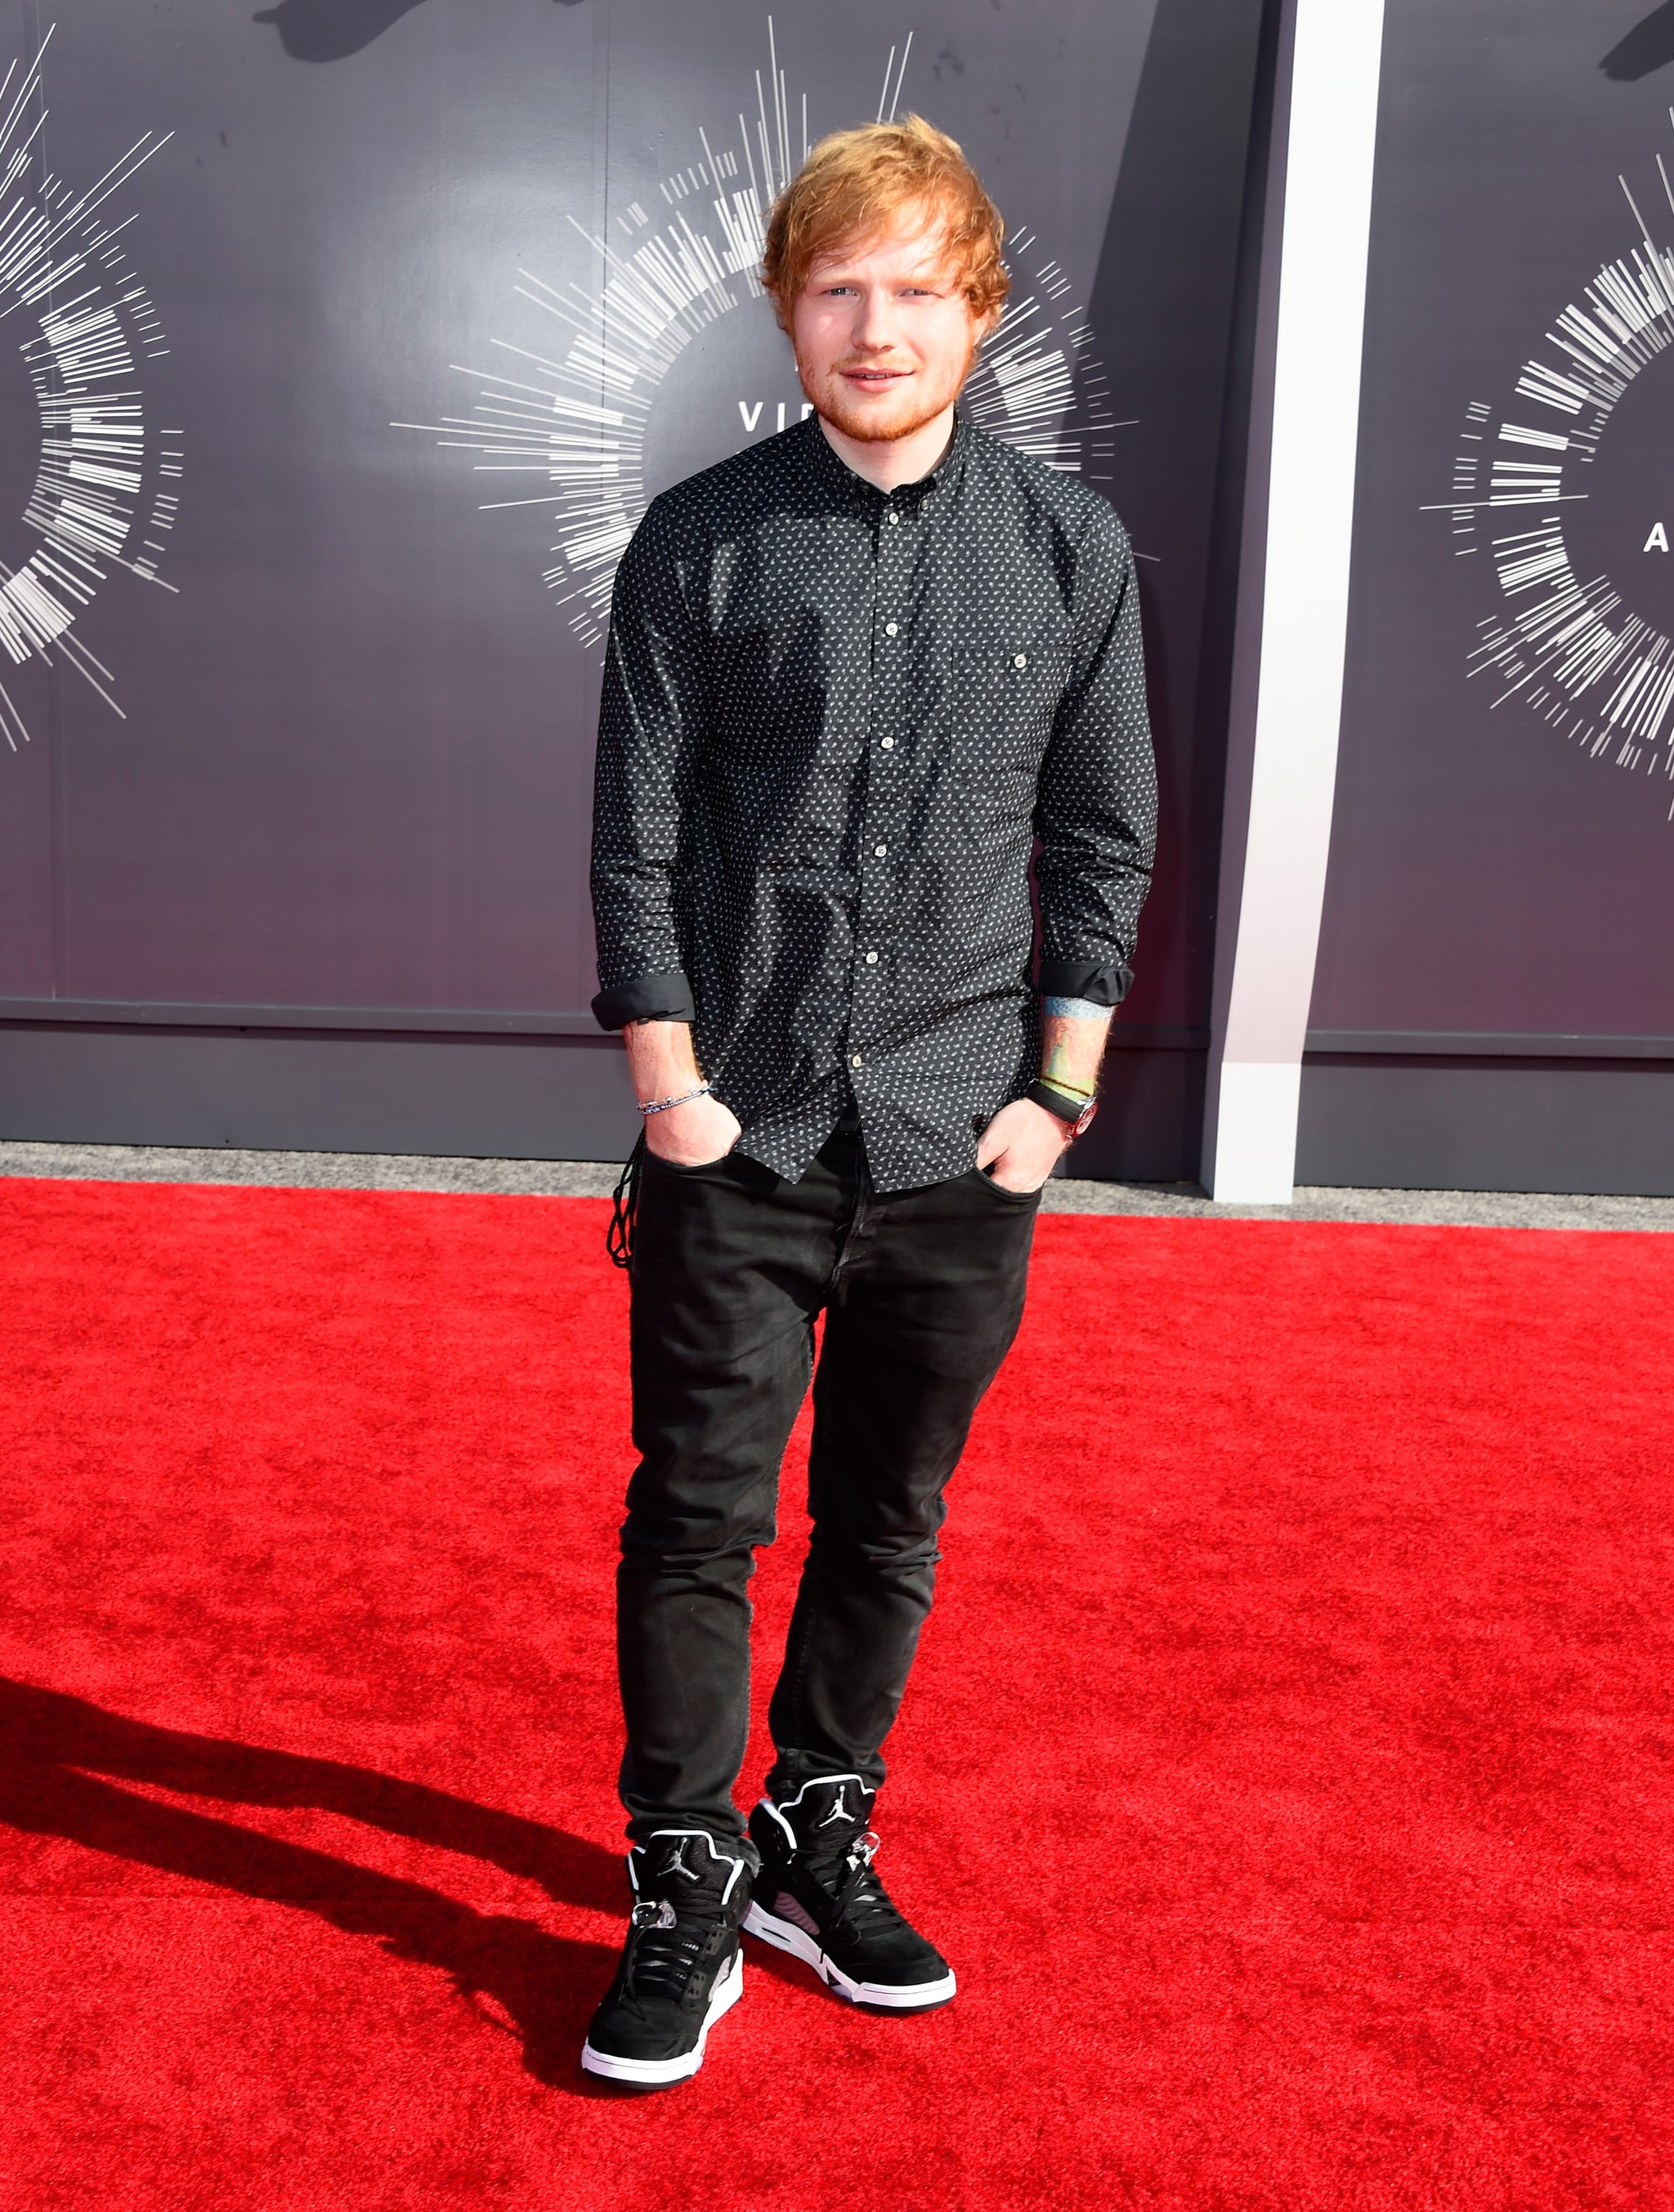 Ed Sheeran | All the Stars on the MTV VMAs Red Carpet | POPSUGAR Celebrity Photo 19